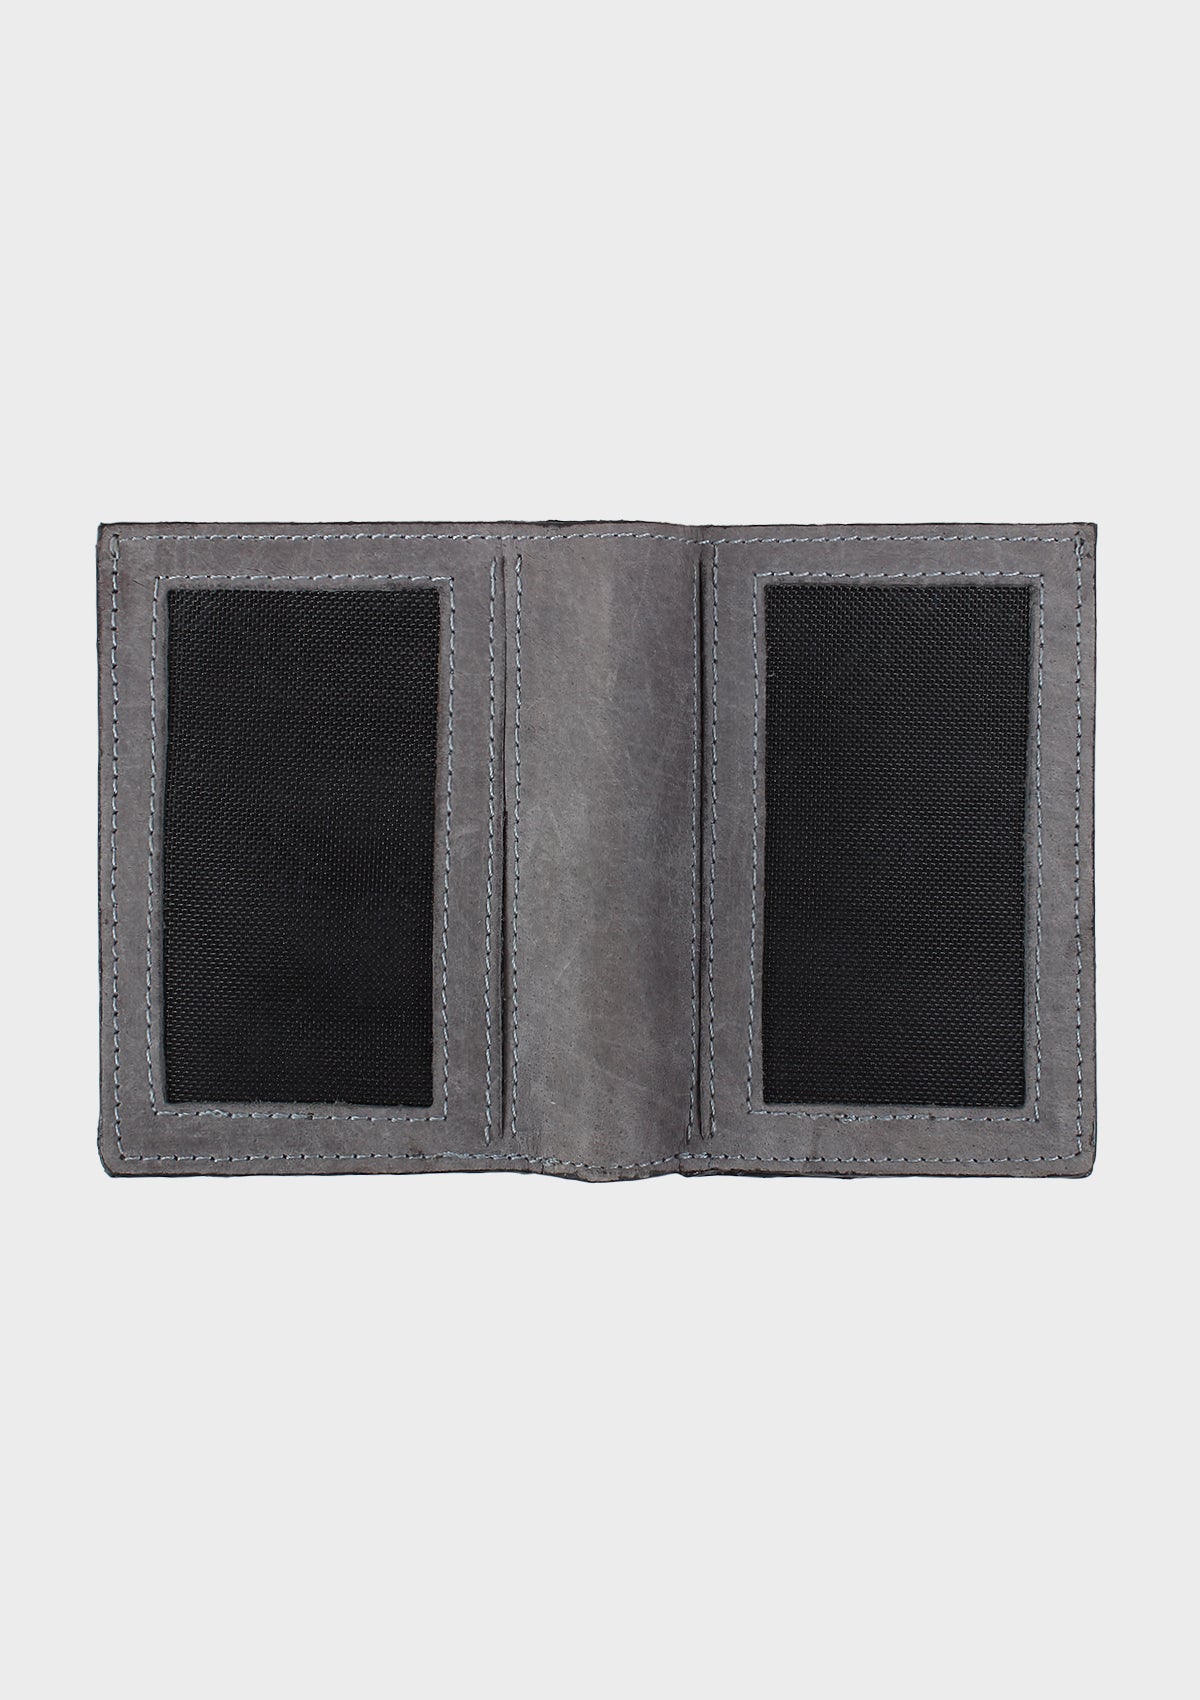 Grey Colour Bi-Fold Italian Leather Card Holder/Slim Wallet (6 Card Slot + 2 ID Slot + Cash Compartment)